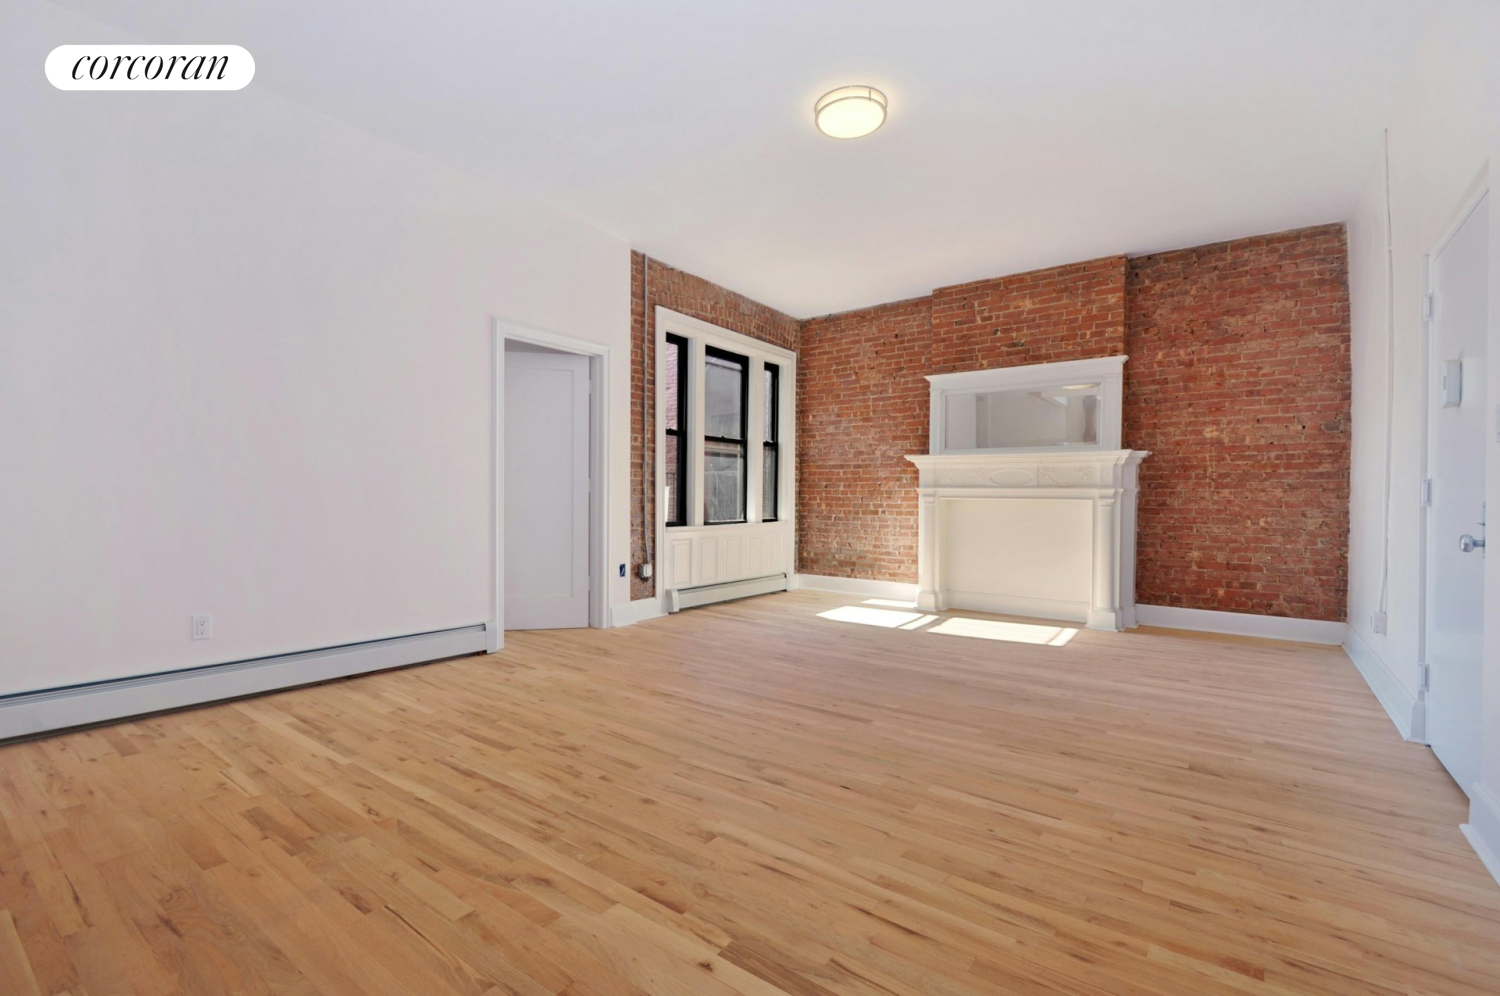 672 St Marks Avenue 3R, Crown Heights, Brooklyn, New York - 3 Bedrooms  
2 Bathrooms  
4 Rooms - 